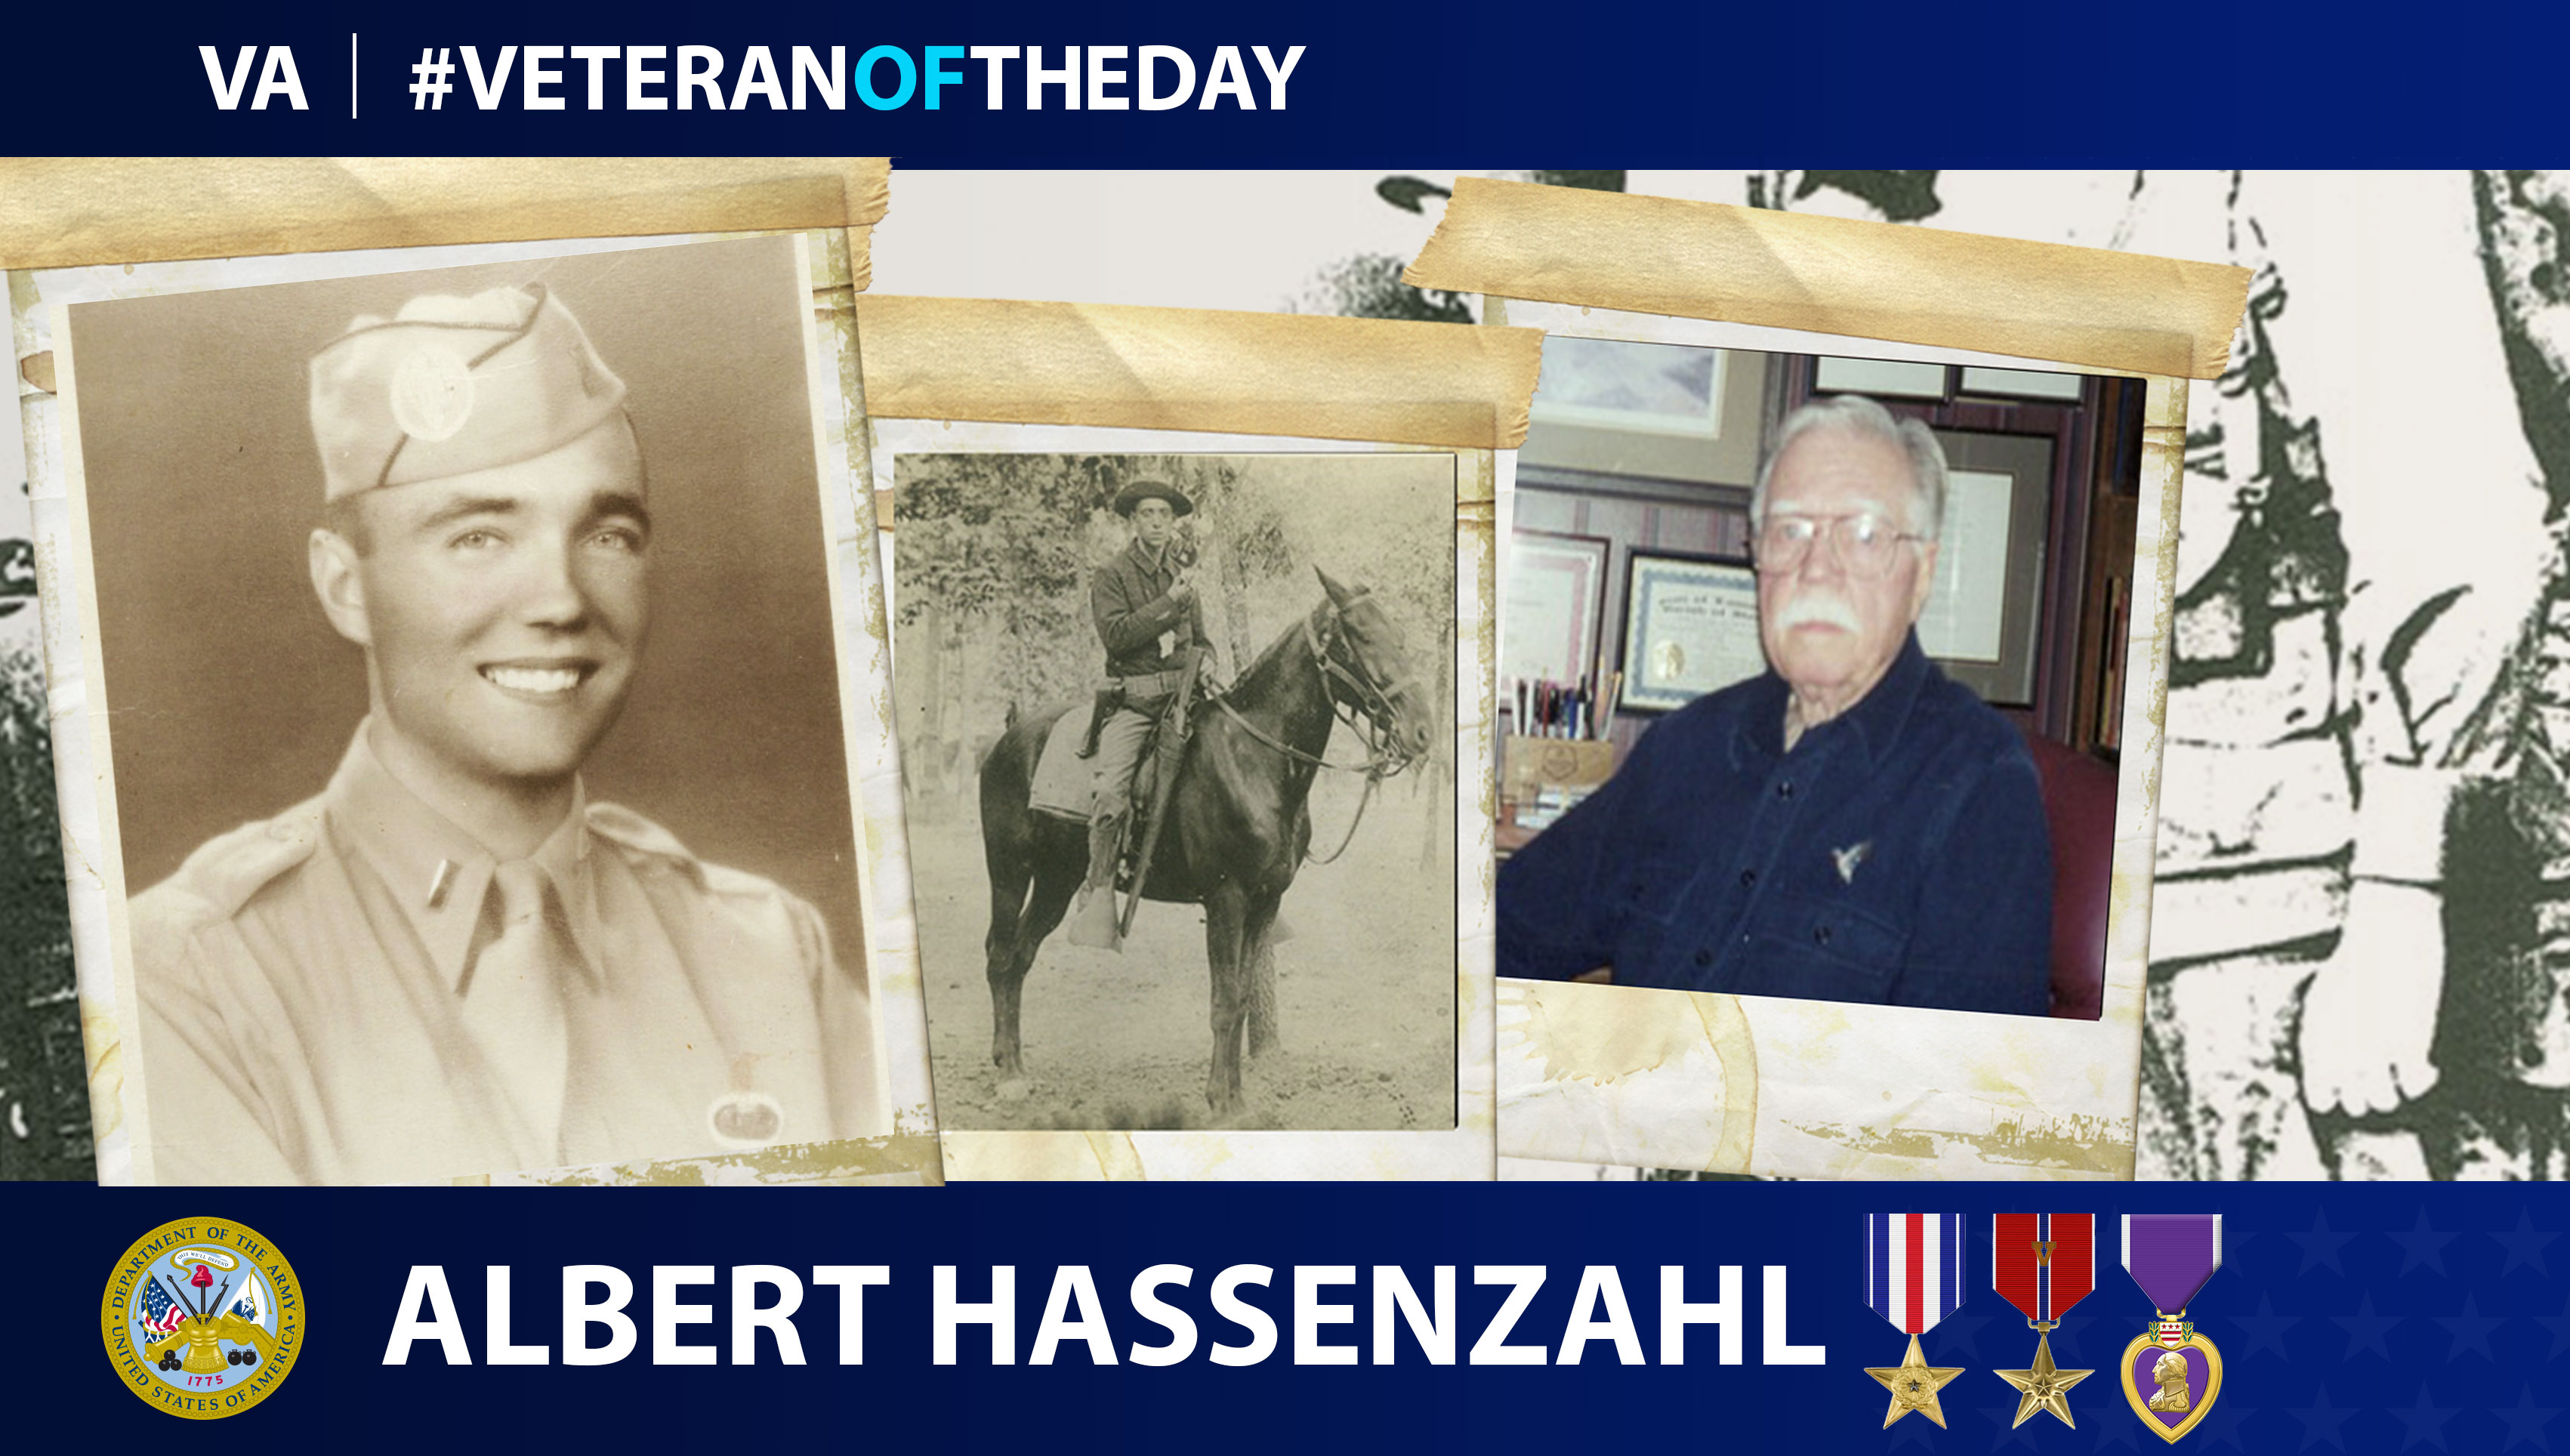 #VeteranoftheDay Albert Hassenzahl